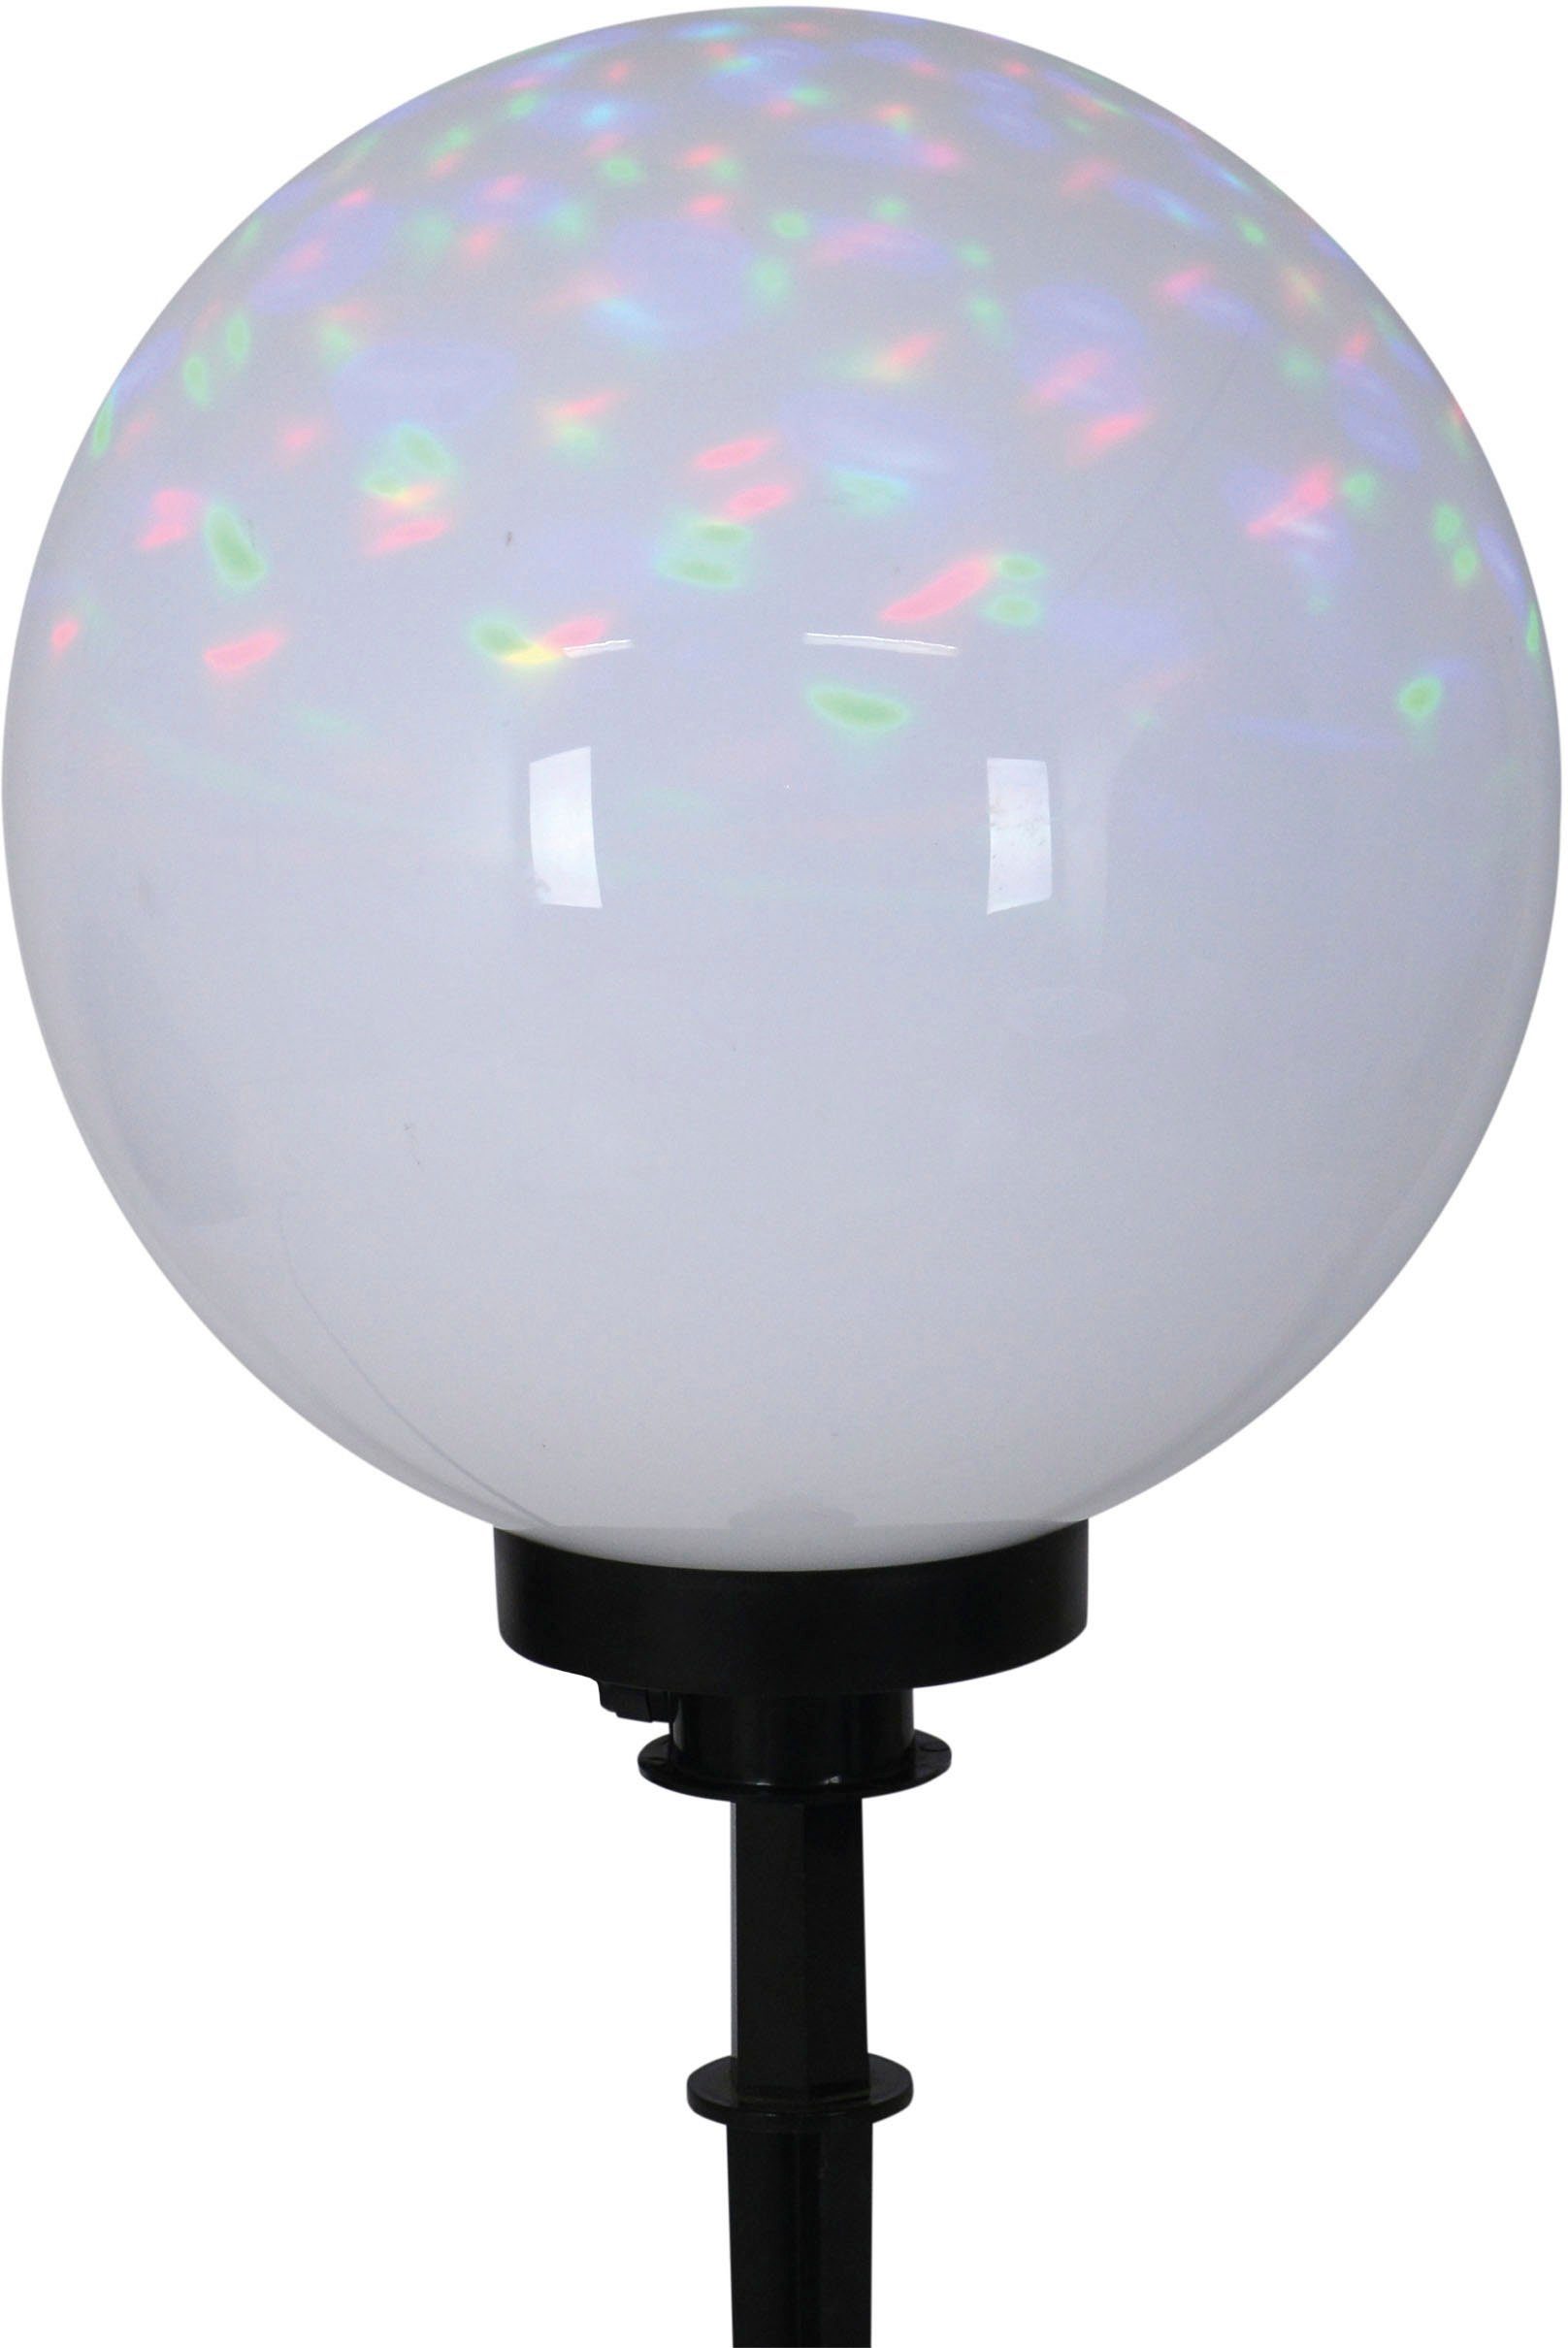 näve Kugelleuchte Ball, Leuchtmittel wechselbar, Kunststoff, weiß/opal, D: 30cm, Spieß schwarz, exkl. 1 x E27 max. 40W